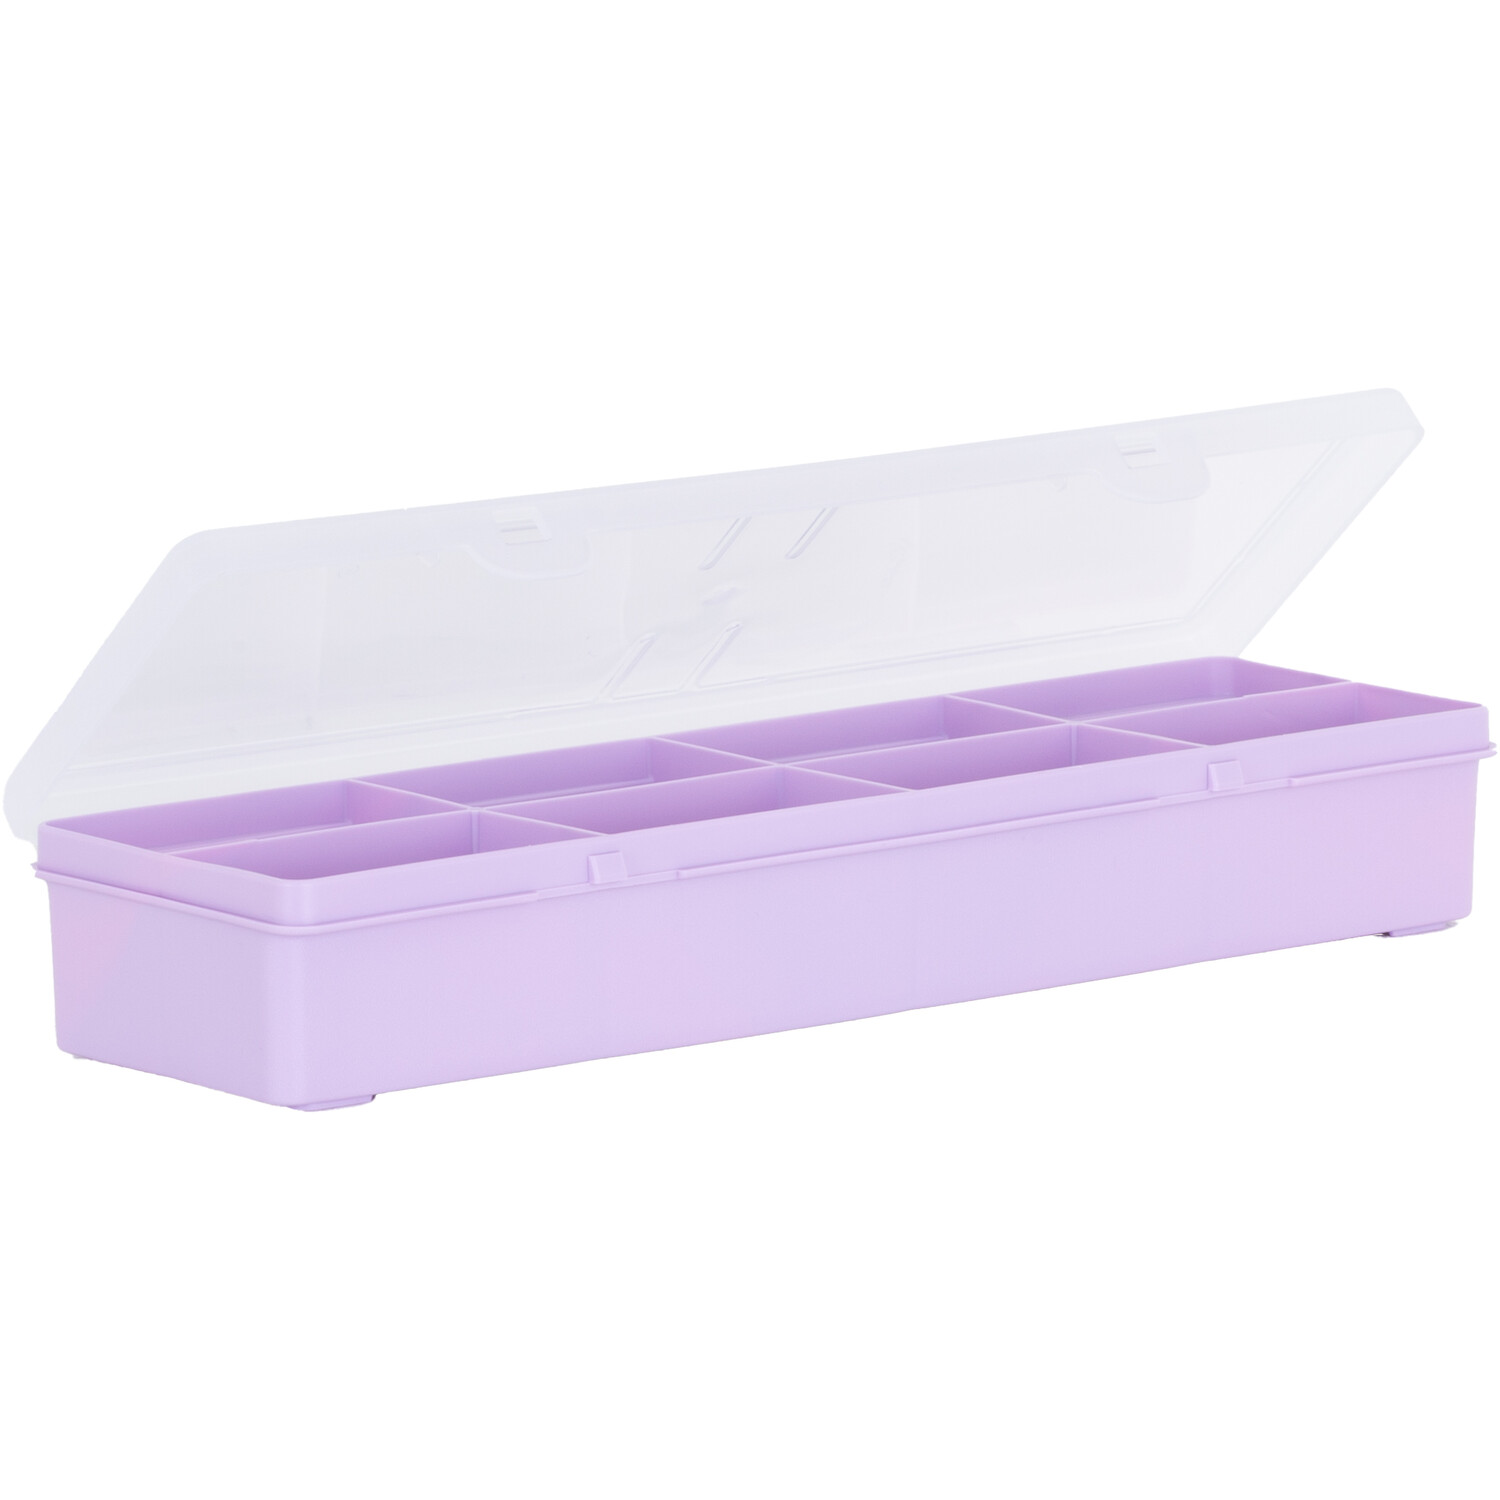 Organiser Box  - Lilac / Medium Image 1